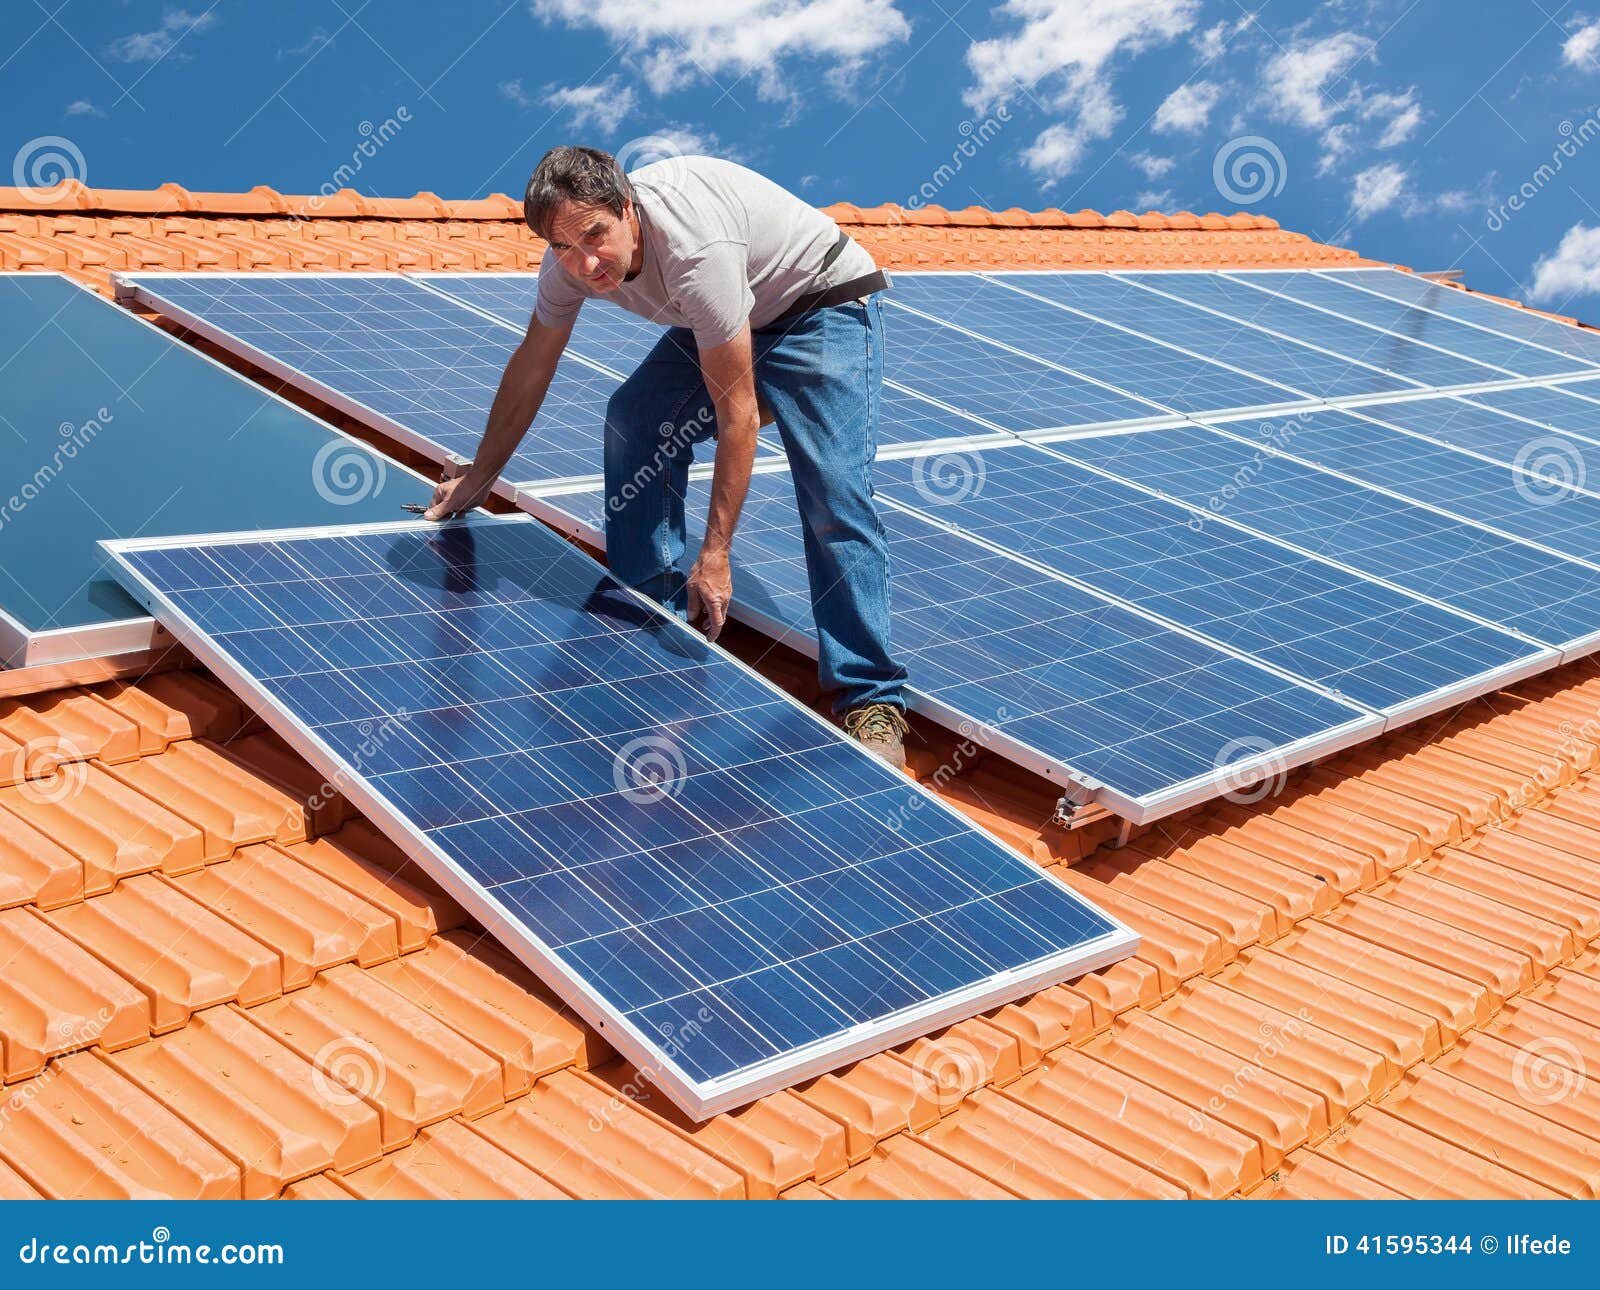 Installing Alternative Energy Photovoltaic Solar Panels Stock Photo